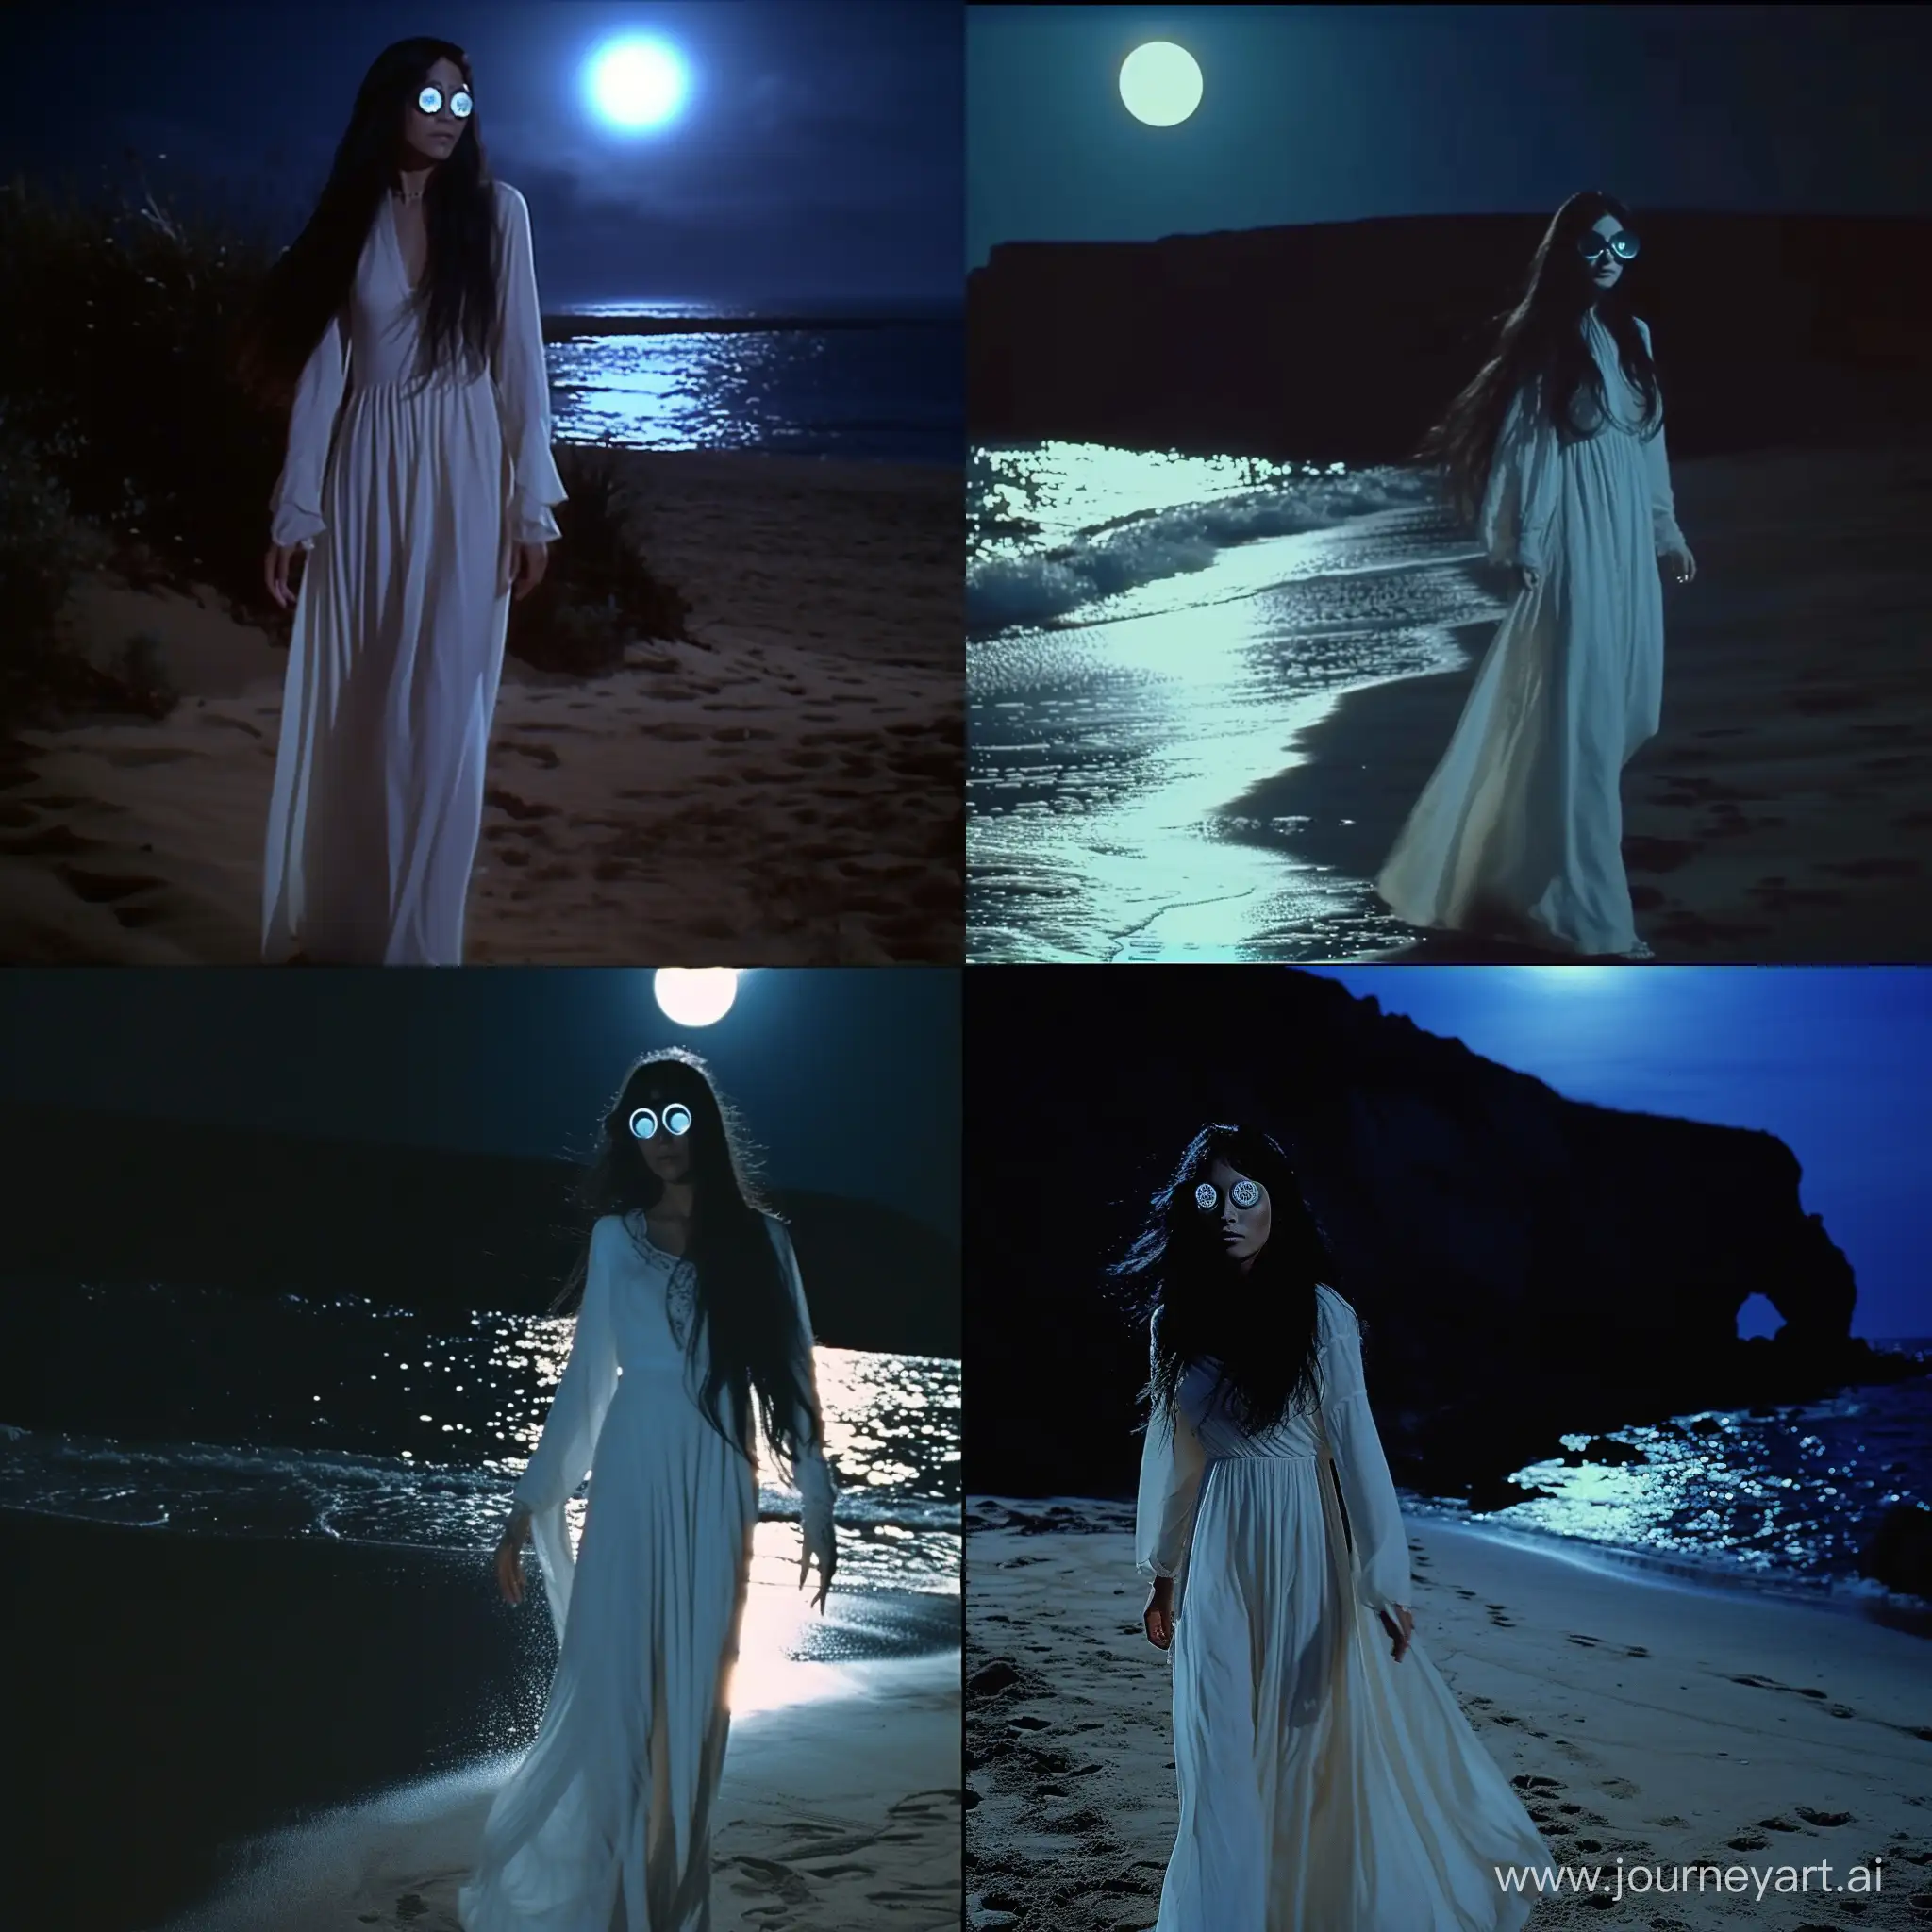 Enigmatic-Woman-in-Moonlit-Beach-Stroll-Excalibur-1981